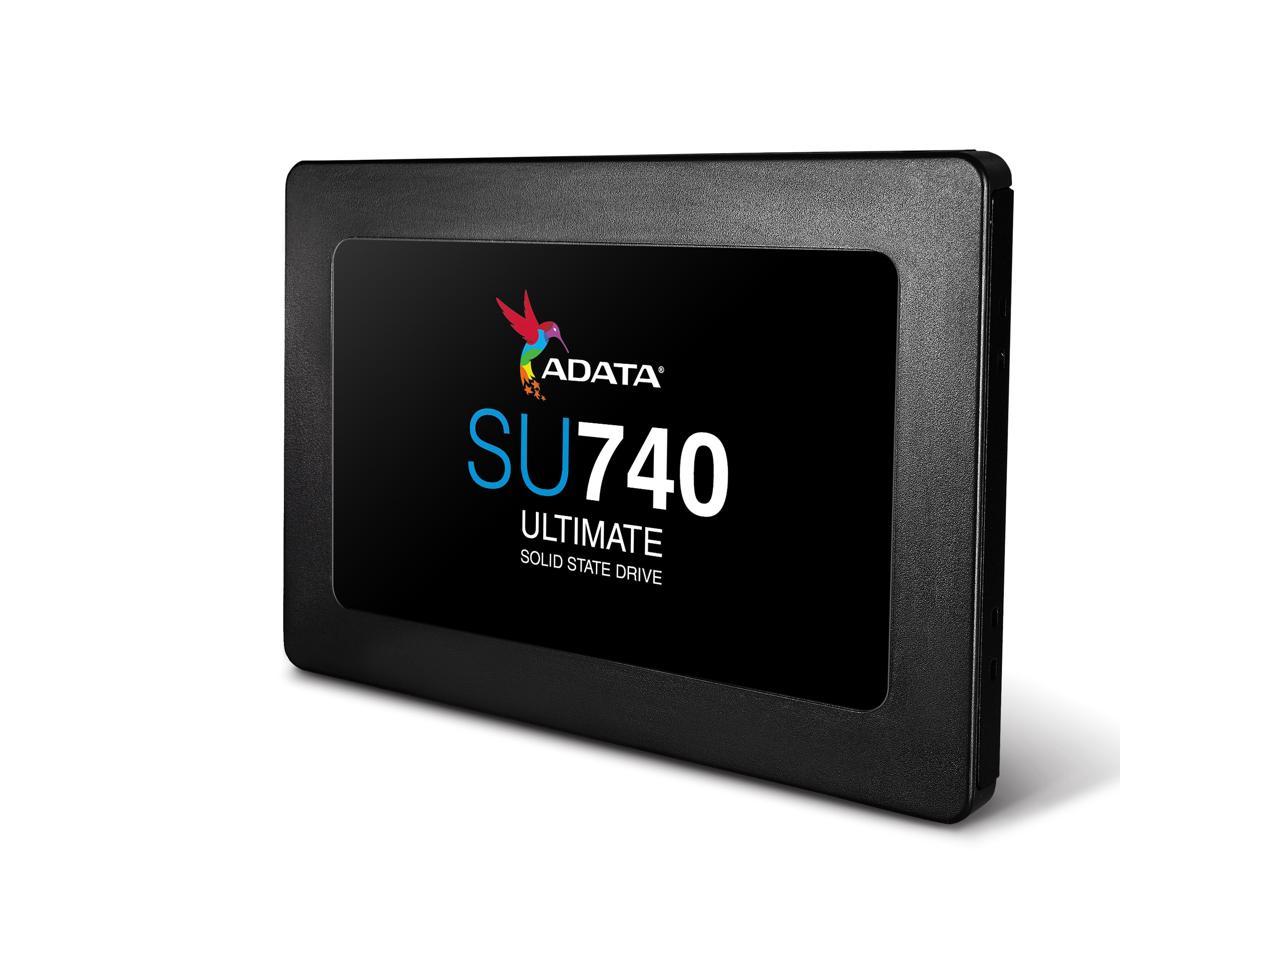 ADATA Ultimate Series: SU740 2TB Internal SATA Solid State Drive